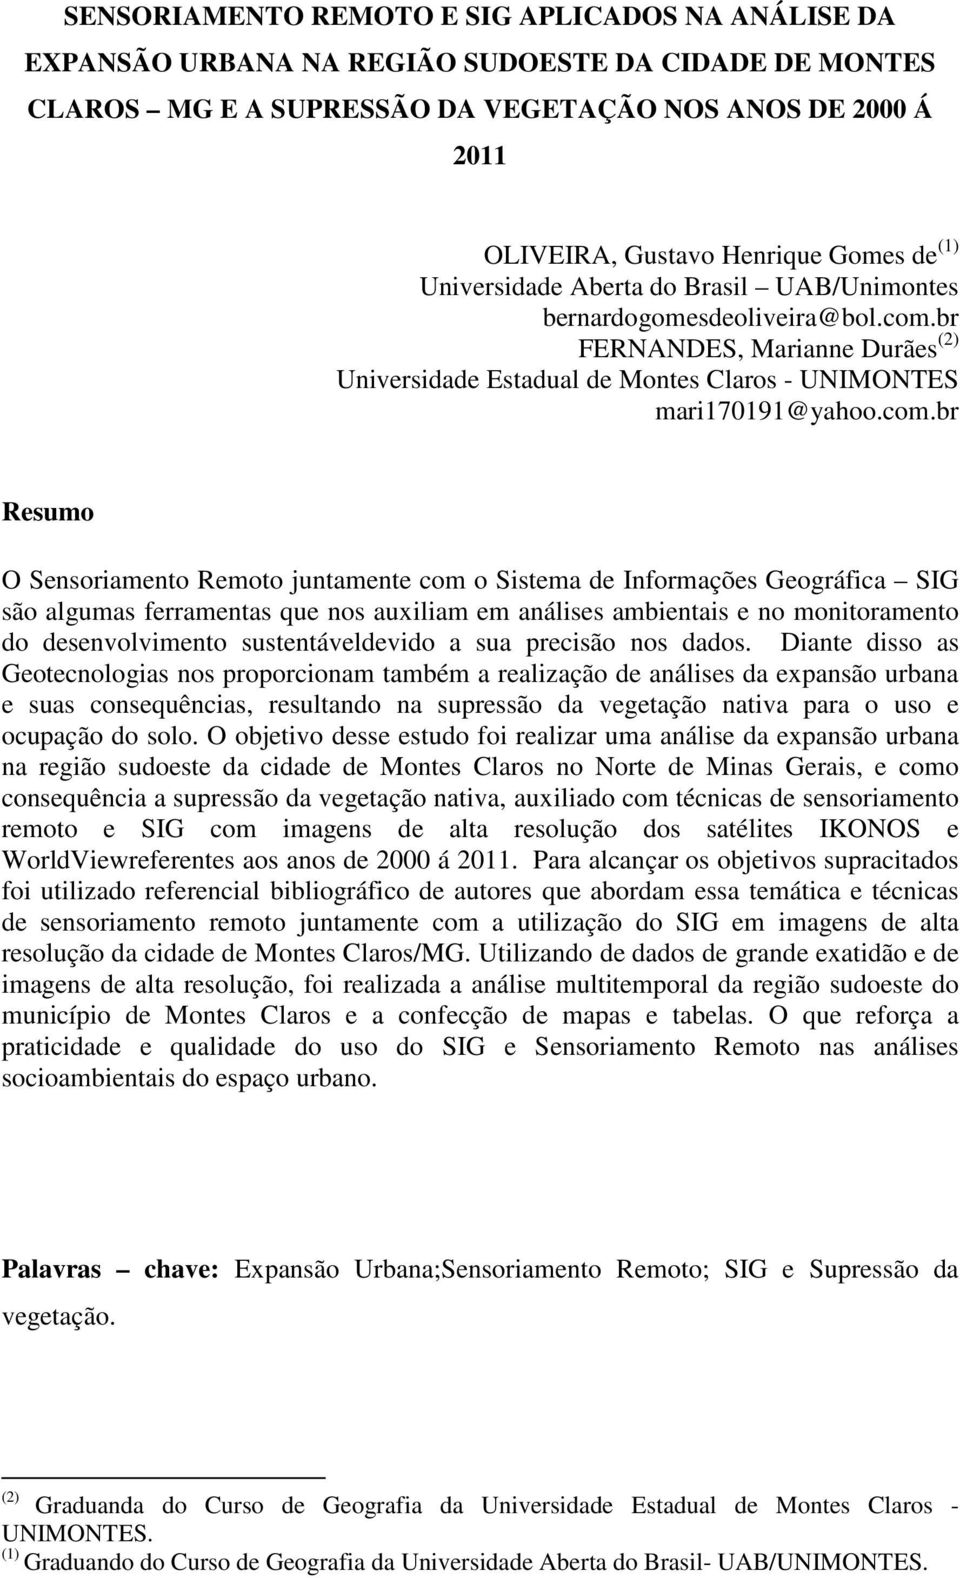 br FERNANDES, Marianne Durães (2) Universidade Estadual de Montes Claros - UNIMONTES mari170191@yahoo.com.